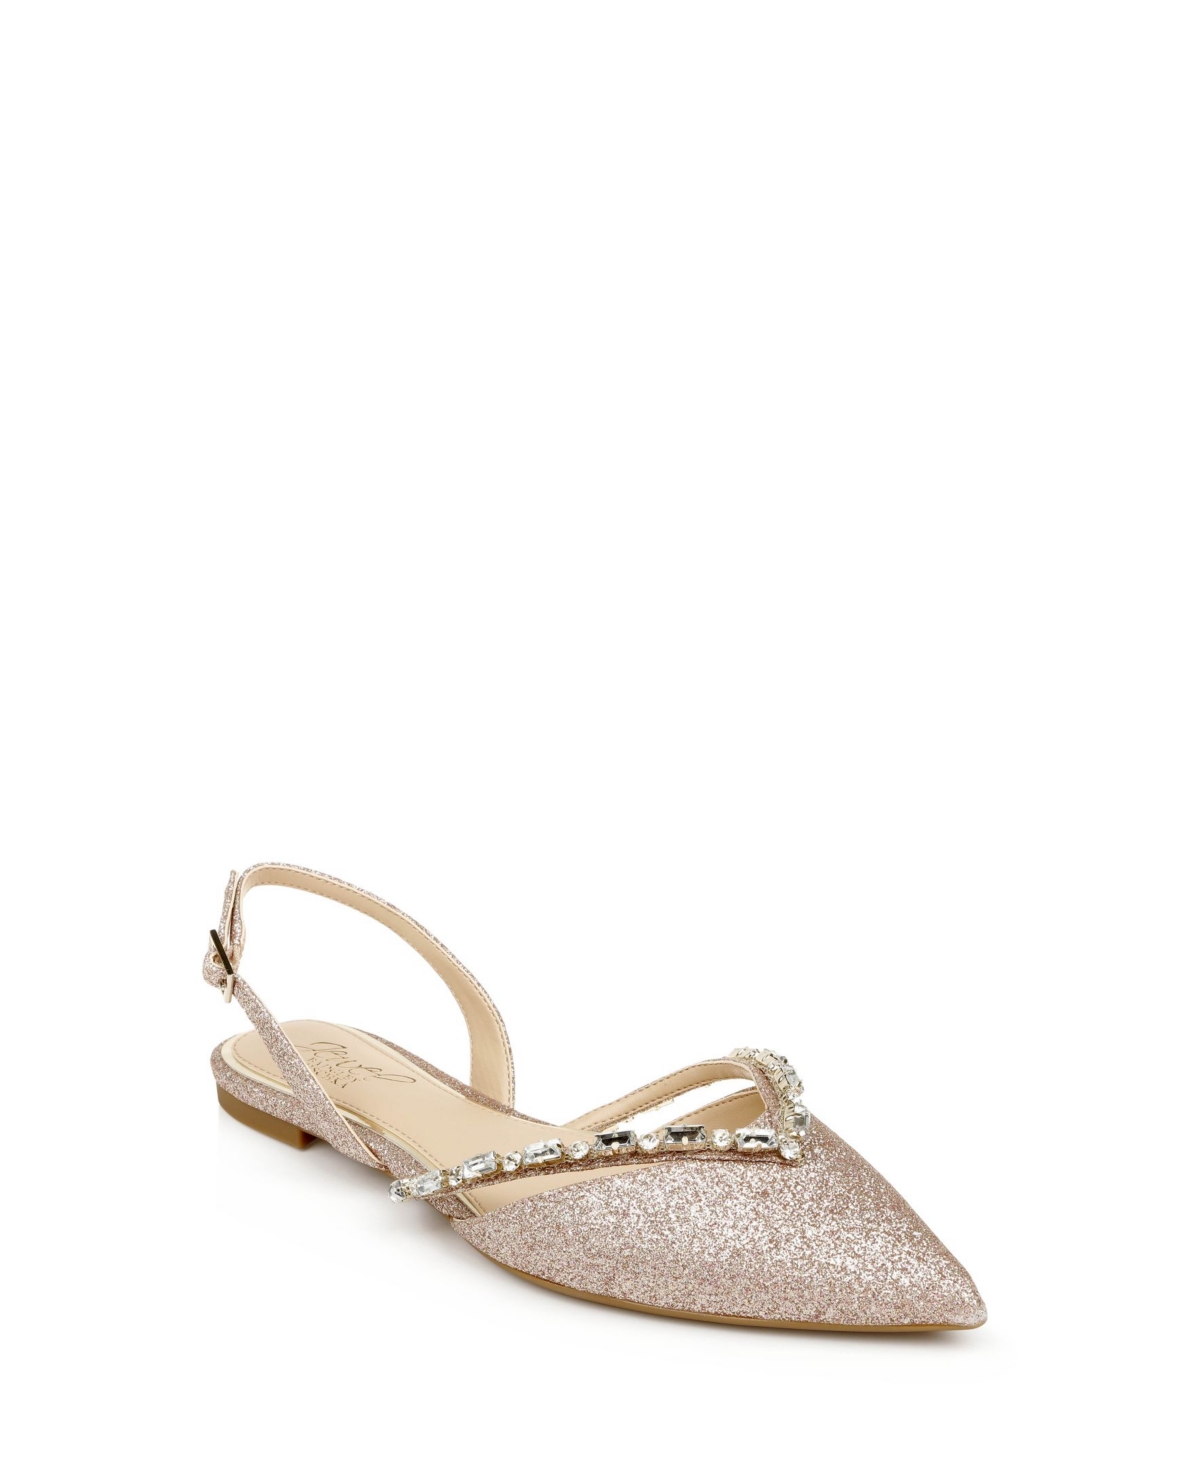 Women's Camden Slingback Pointed Toe Evening Flats - Silver Glitter